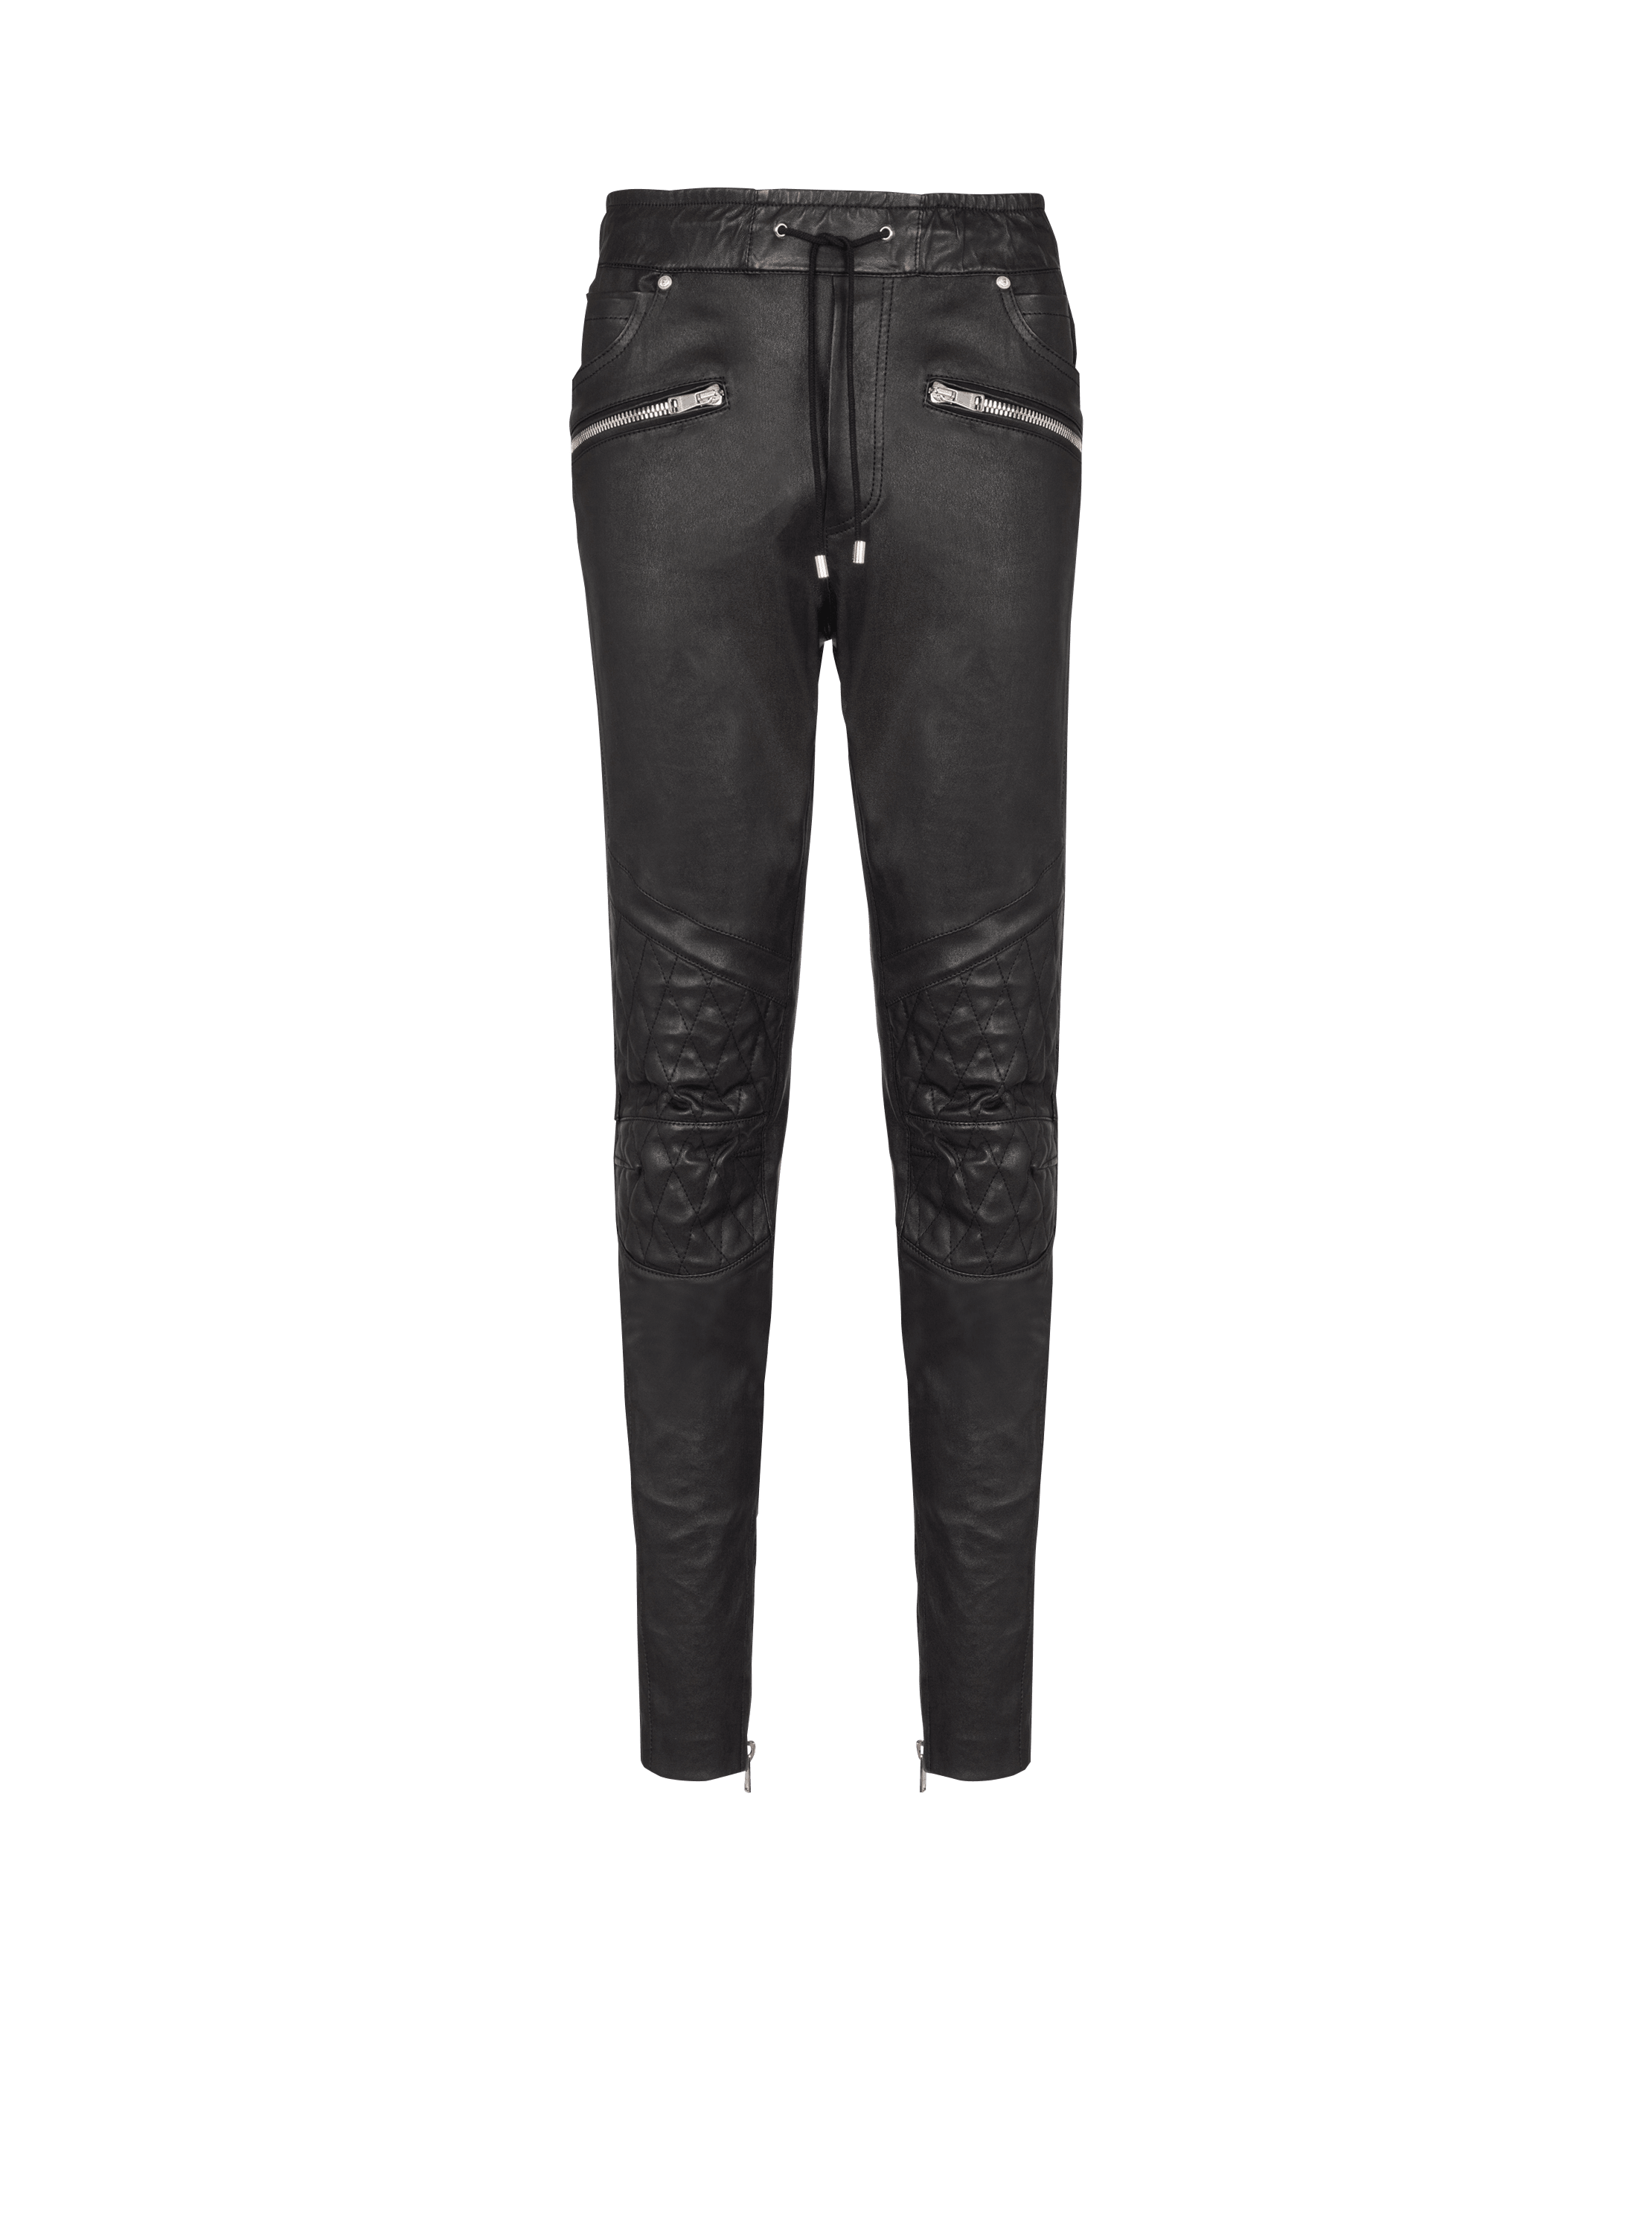 BALMAIN PARIS Mens Marine Navy Rock N Roll Leather Pants 100%LAMB SKIN  Authentic